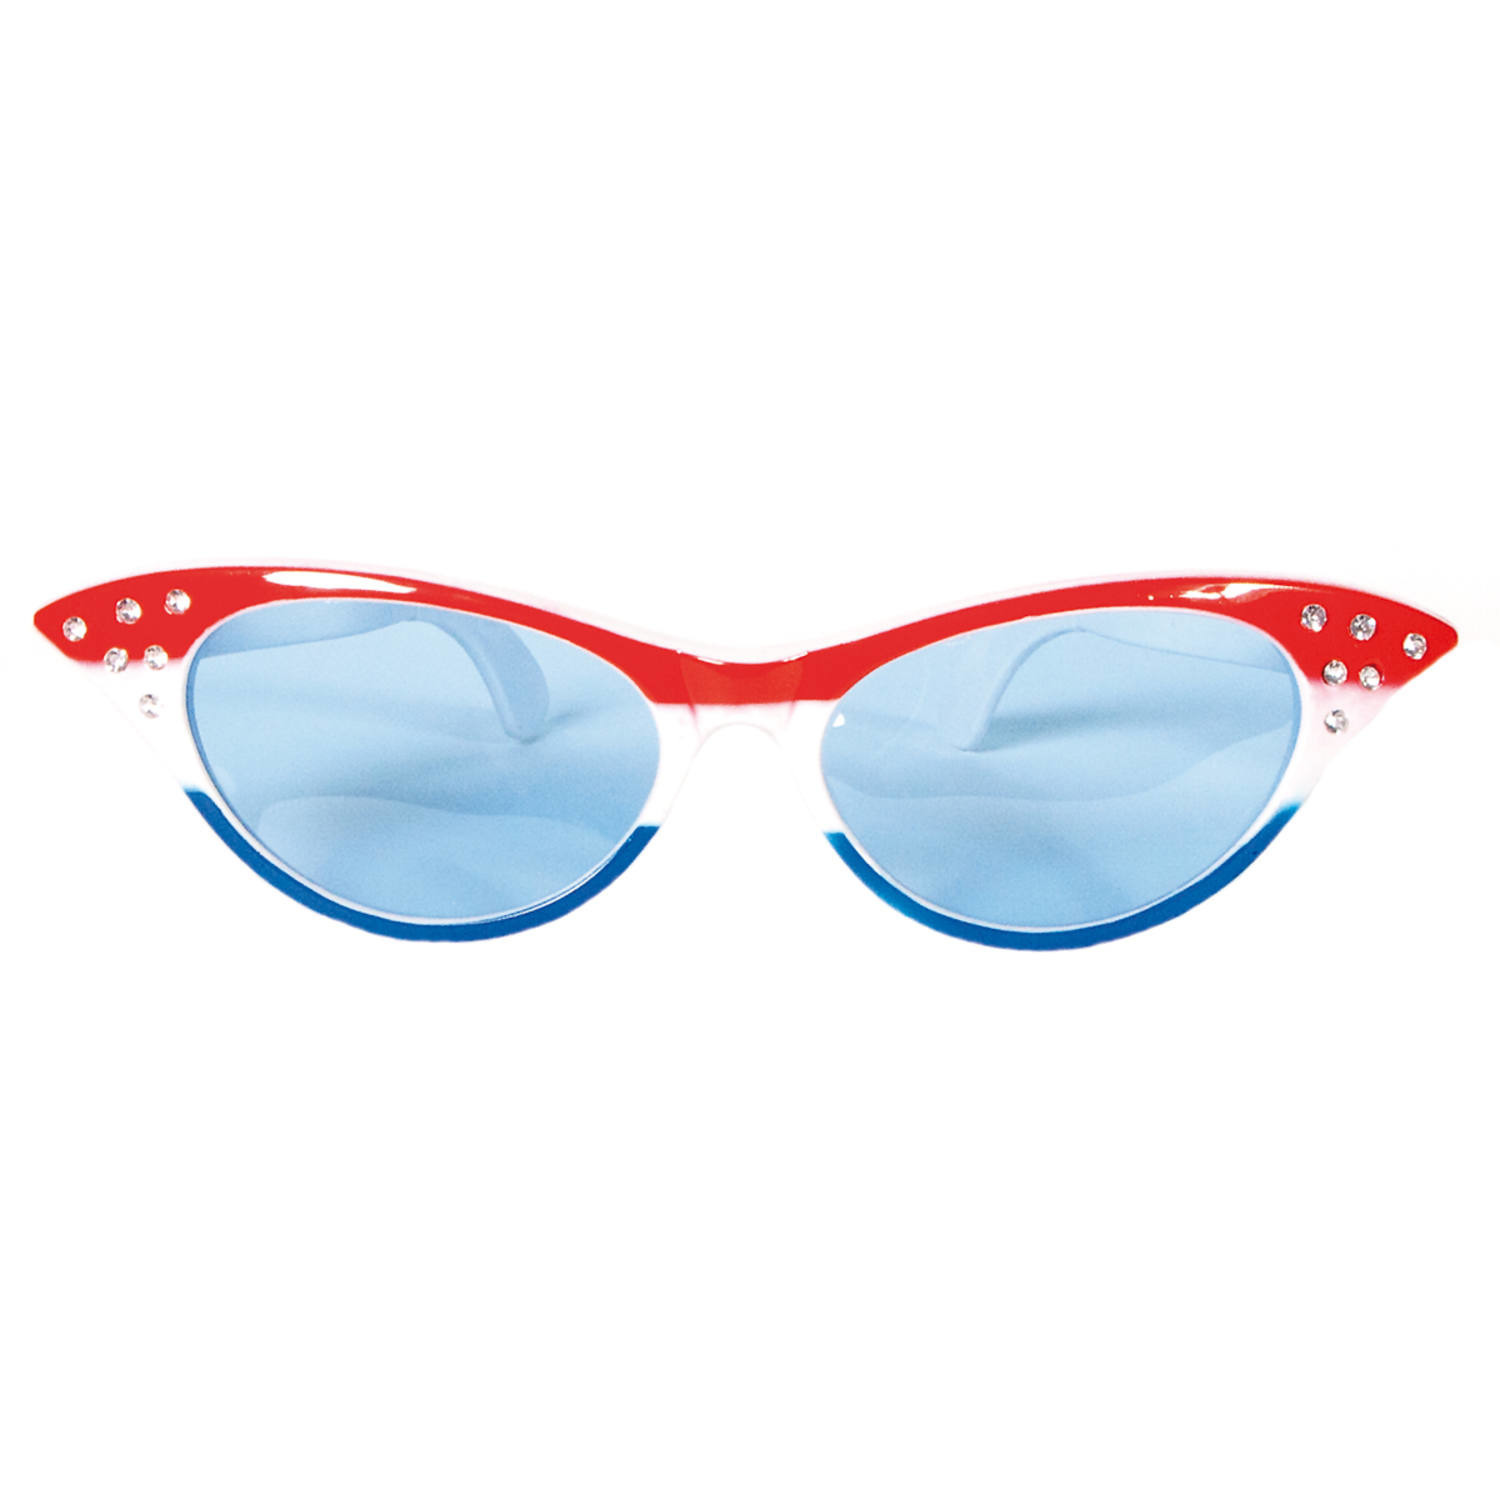 Mega bril vlindermodel rood-wit-blauw